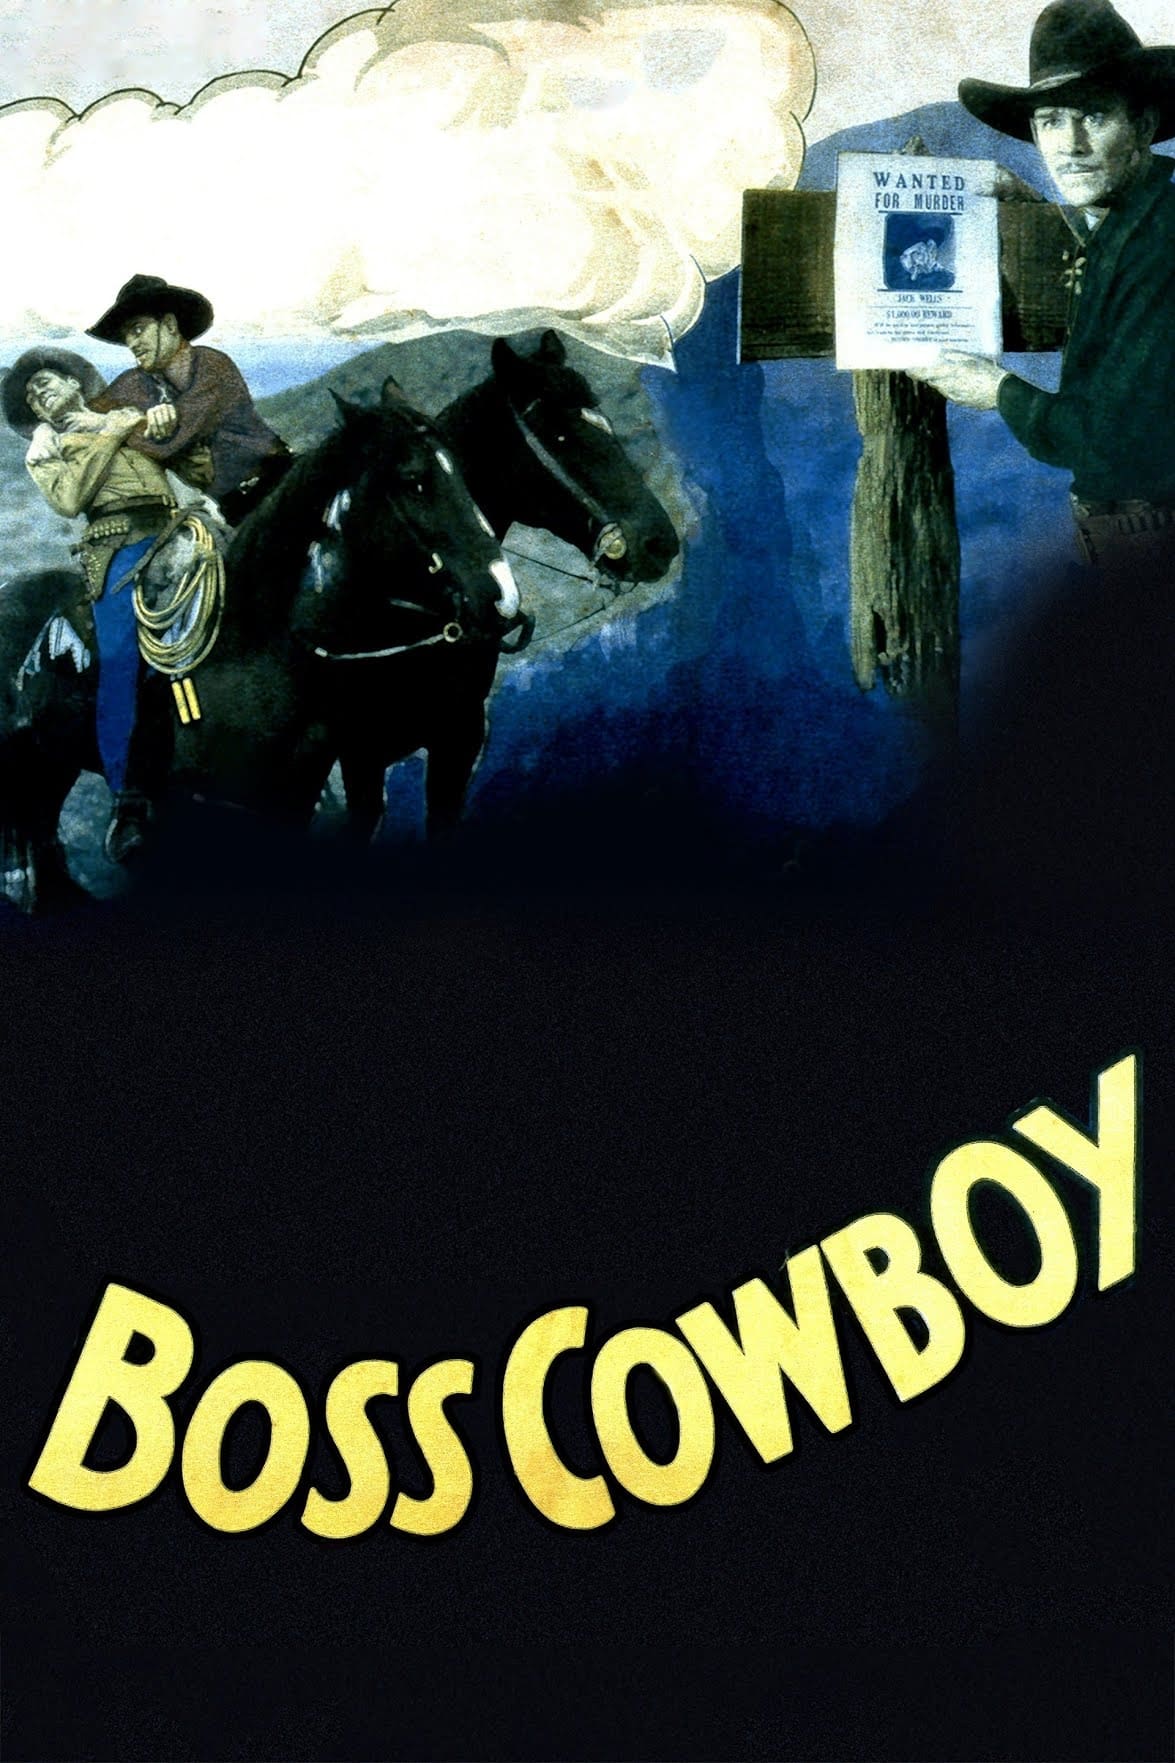 The Boss Cowboy